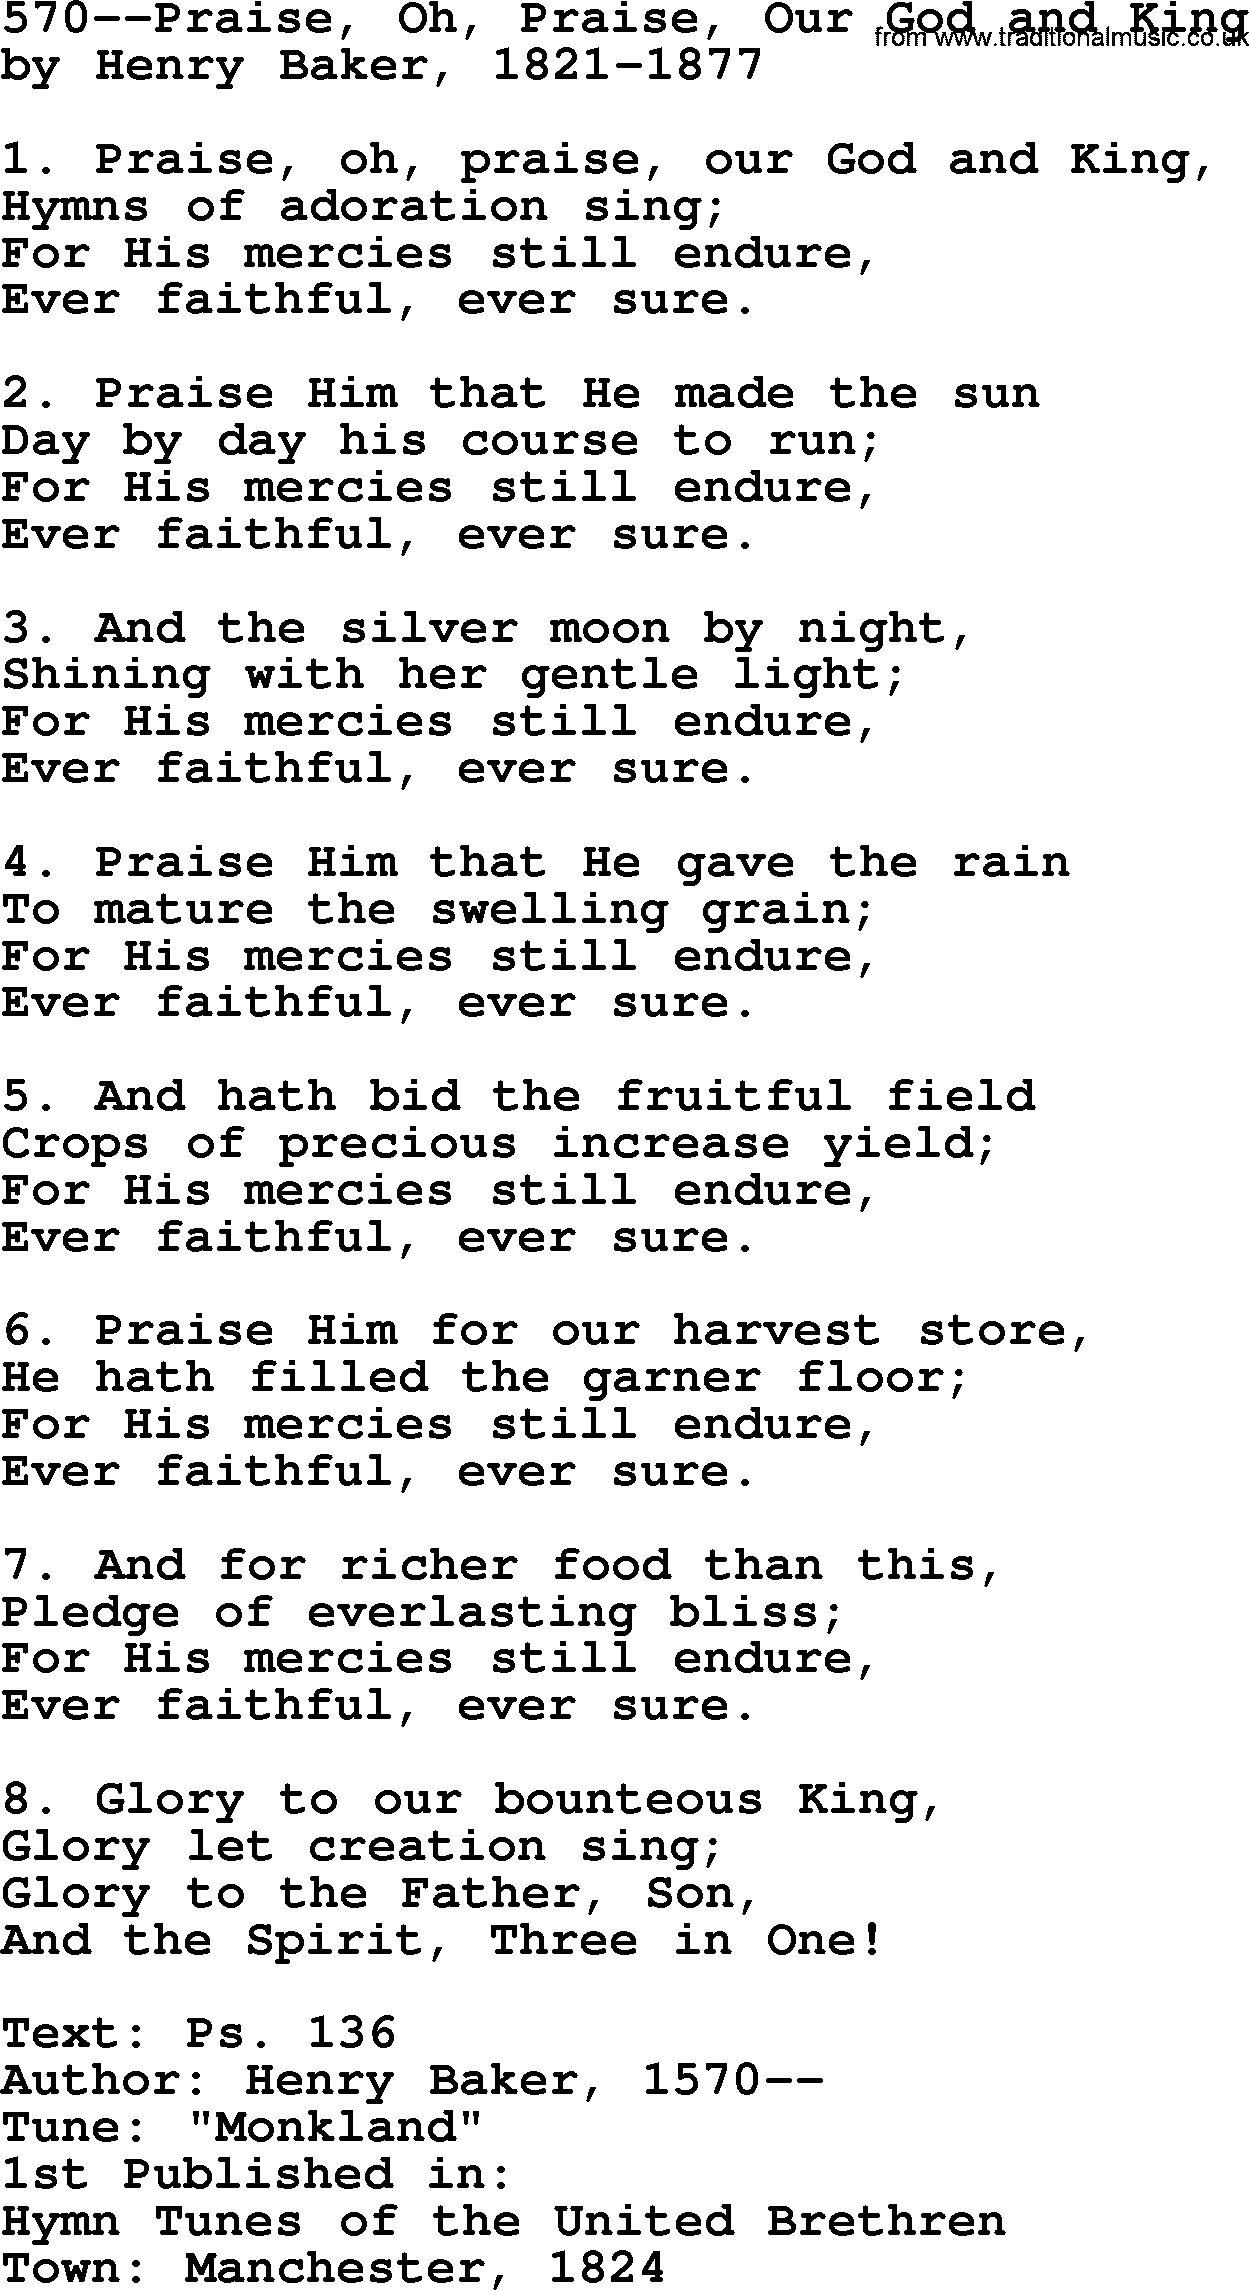 Lutheran Hymn: 570--Praise, Oh, Praise, Our God and King.txt lyrics with PDF